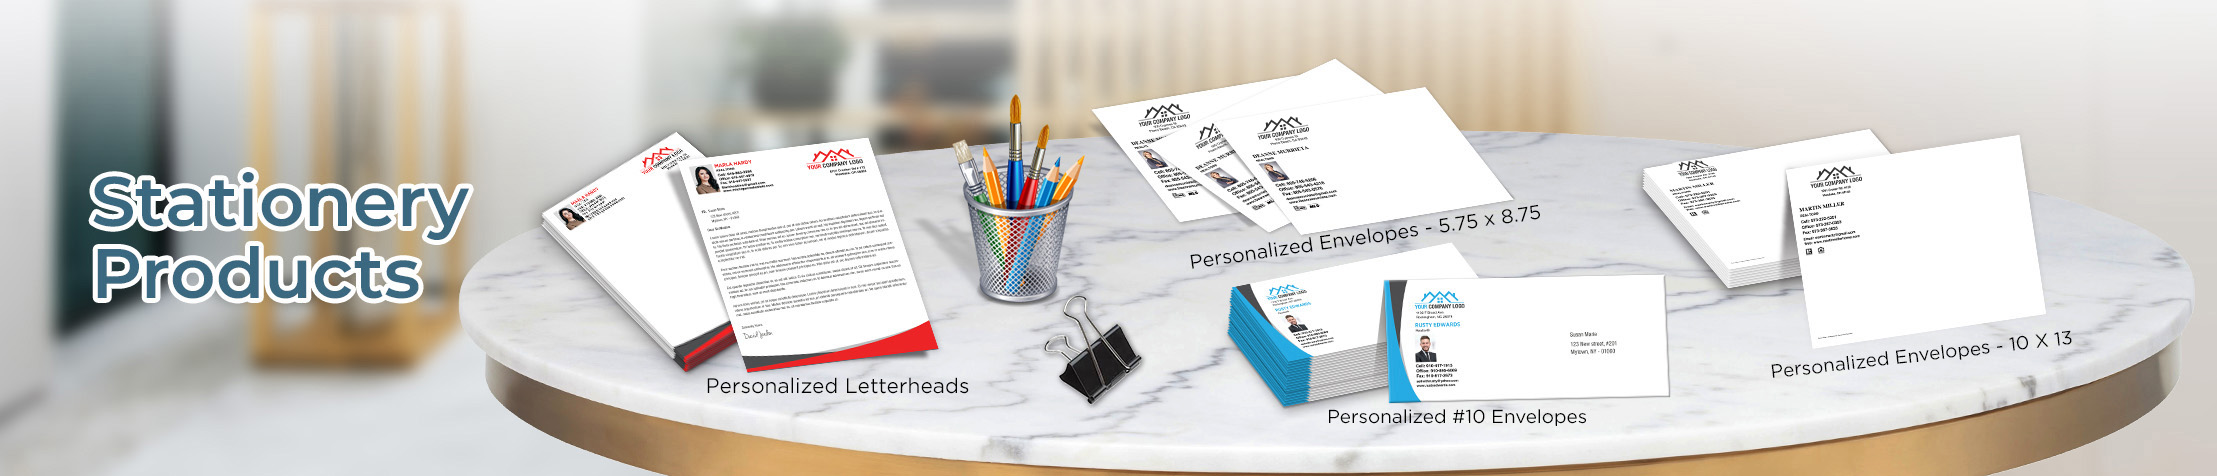 Independent Realtor Real Estate Stationery Products - Custom Letterhead & Envelopes Stationery Products for Realtors | BestPrintBuy.com